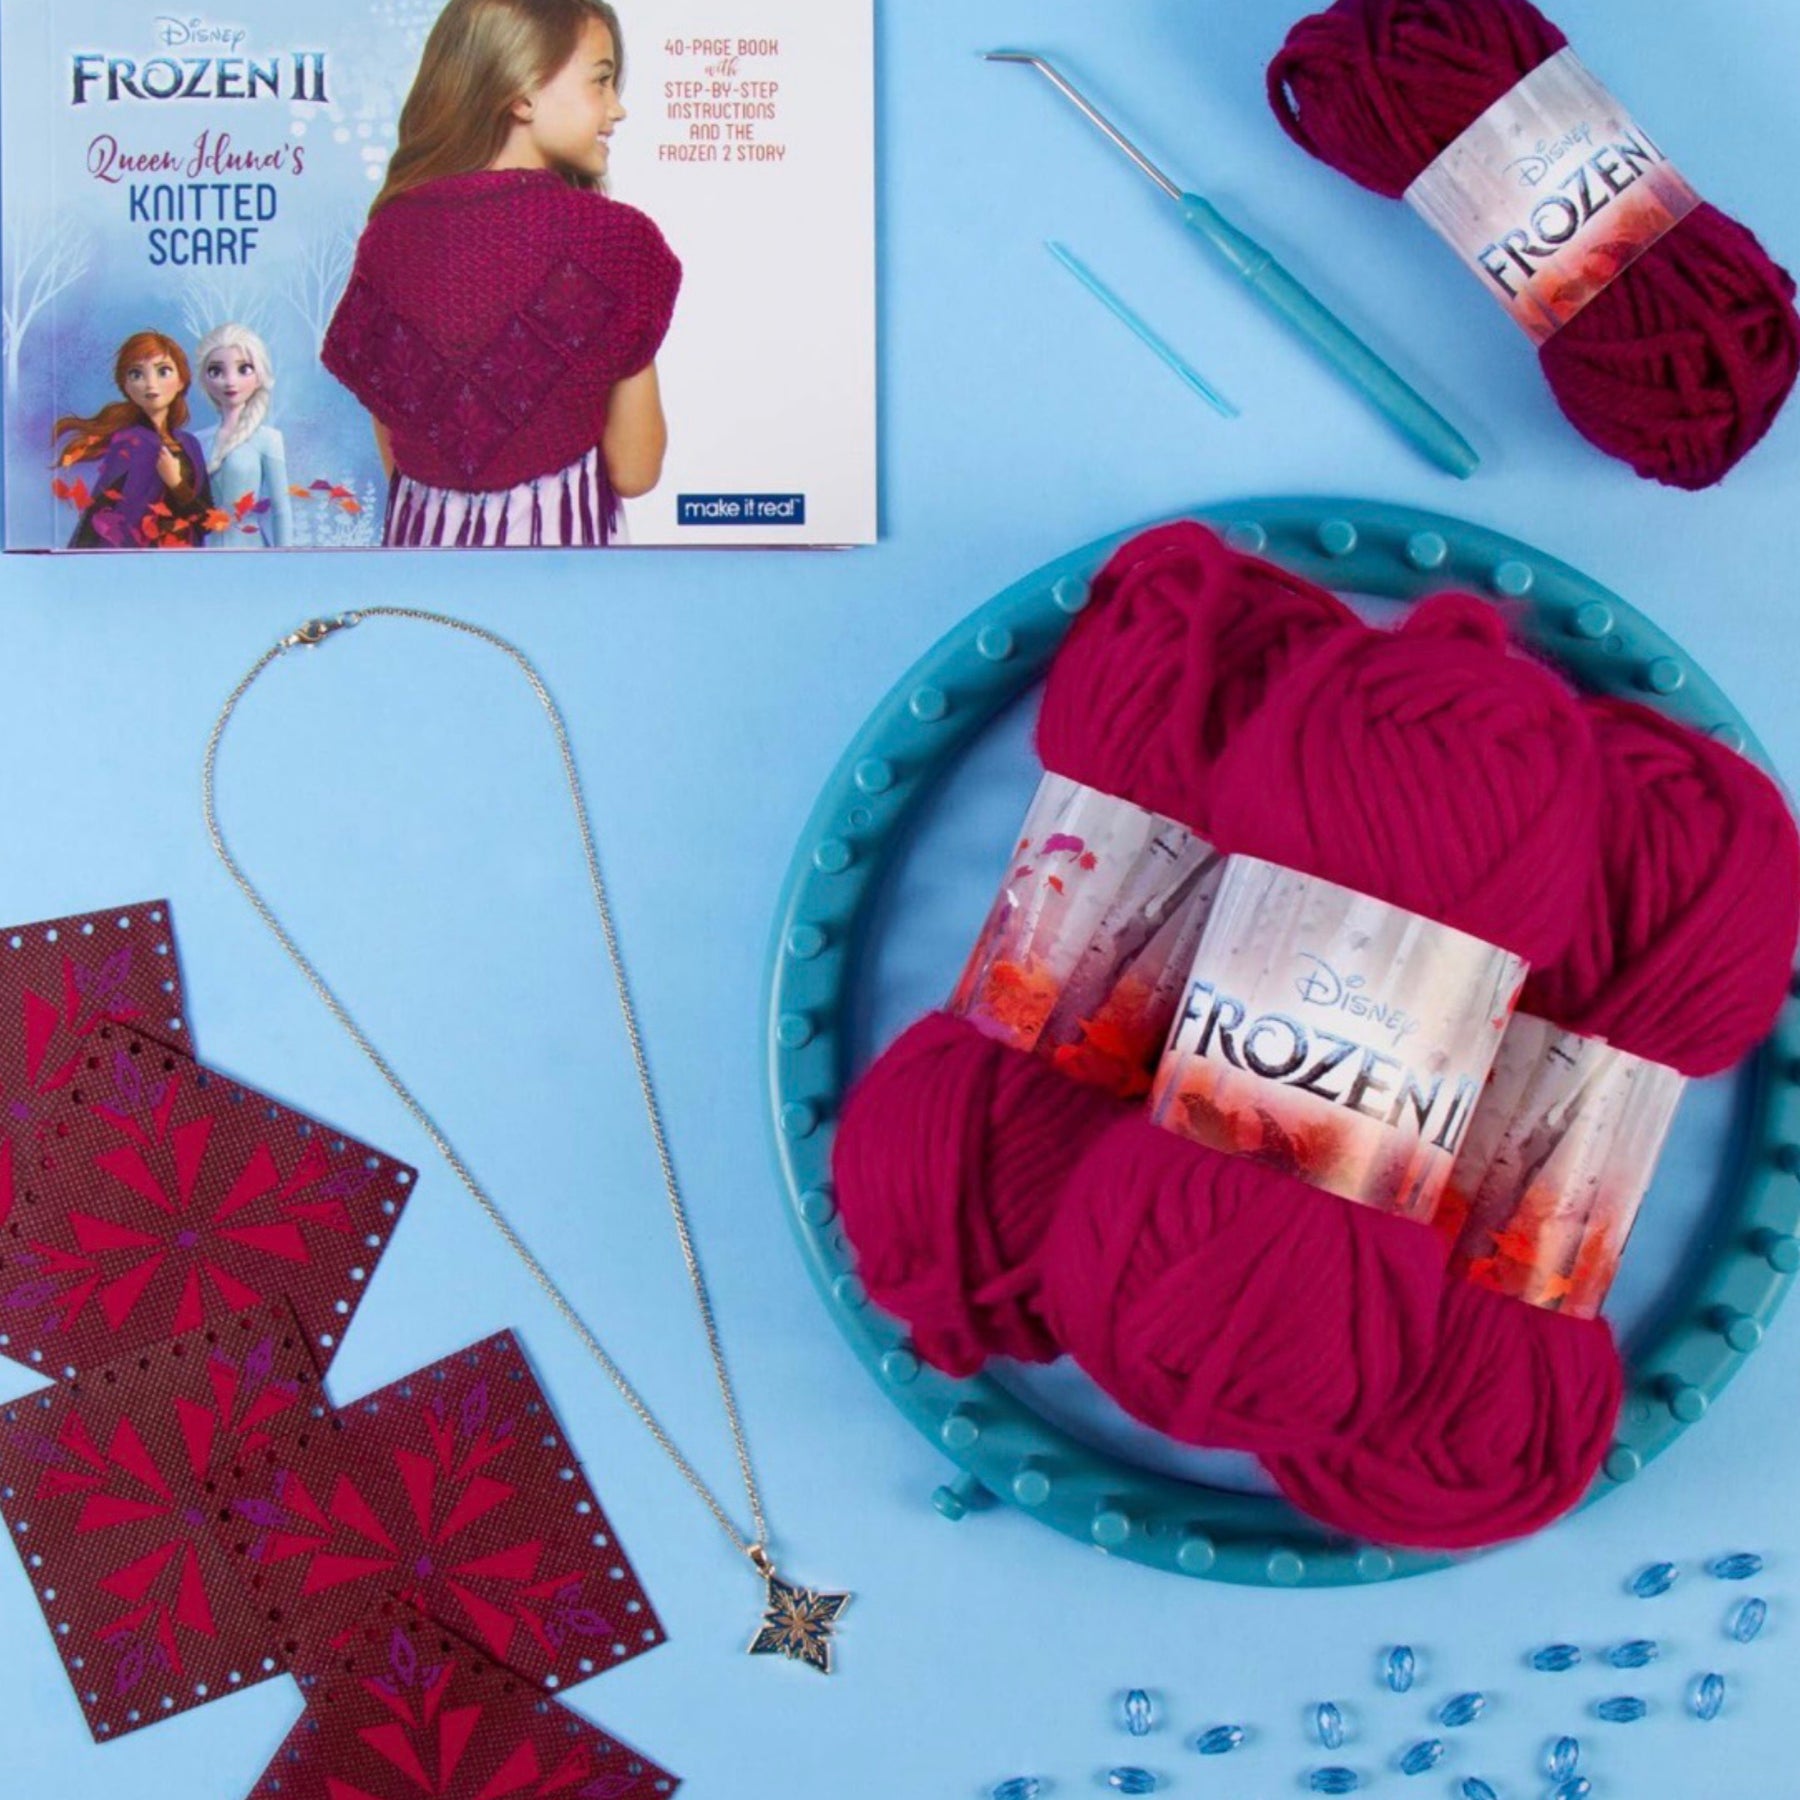 Frozen 2 Loom Knitting Scarf Kit For Kids - DIY Queen Iduna's Shawl